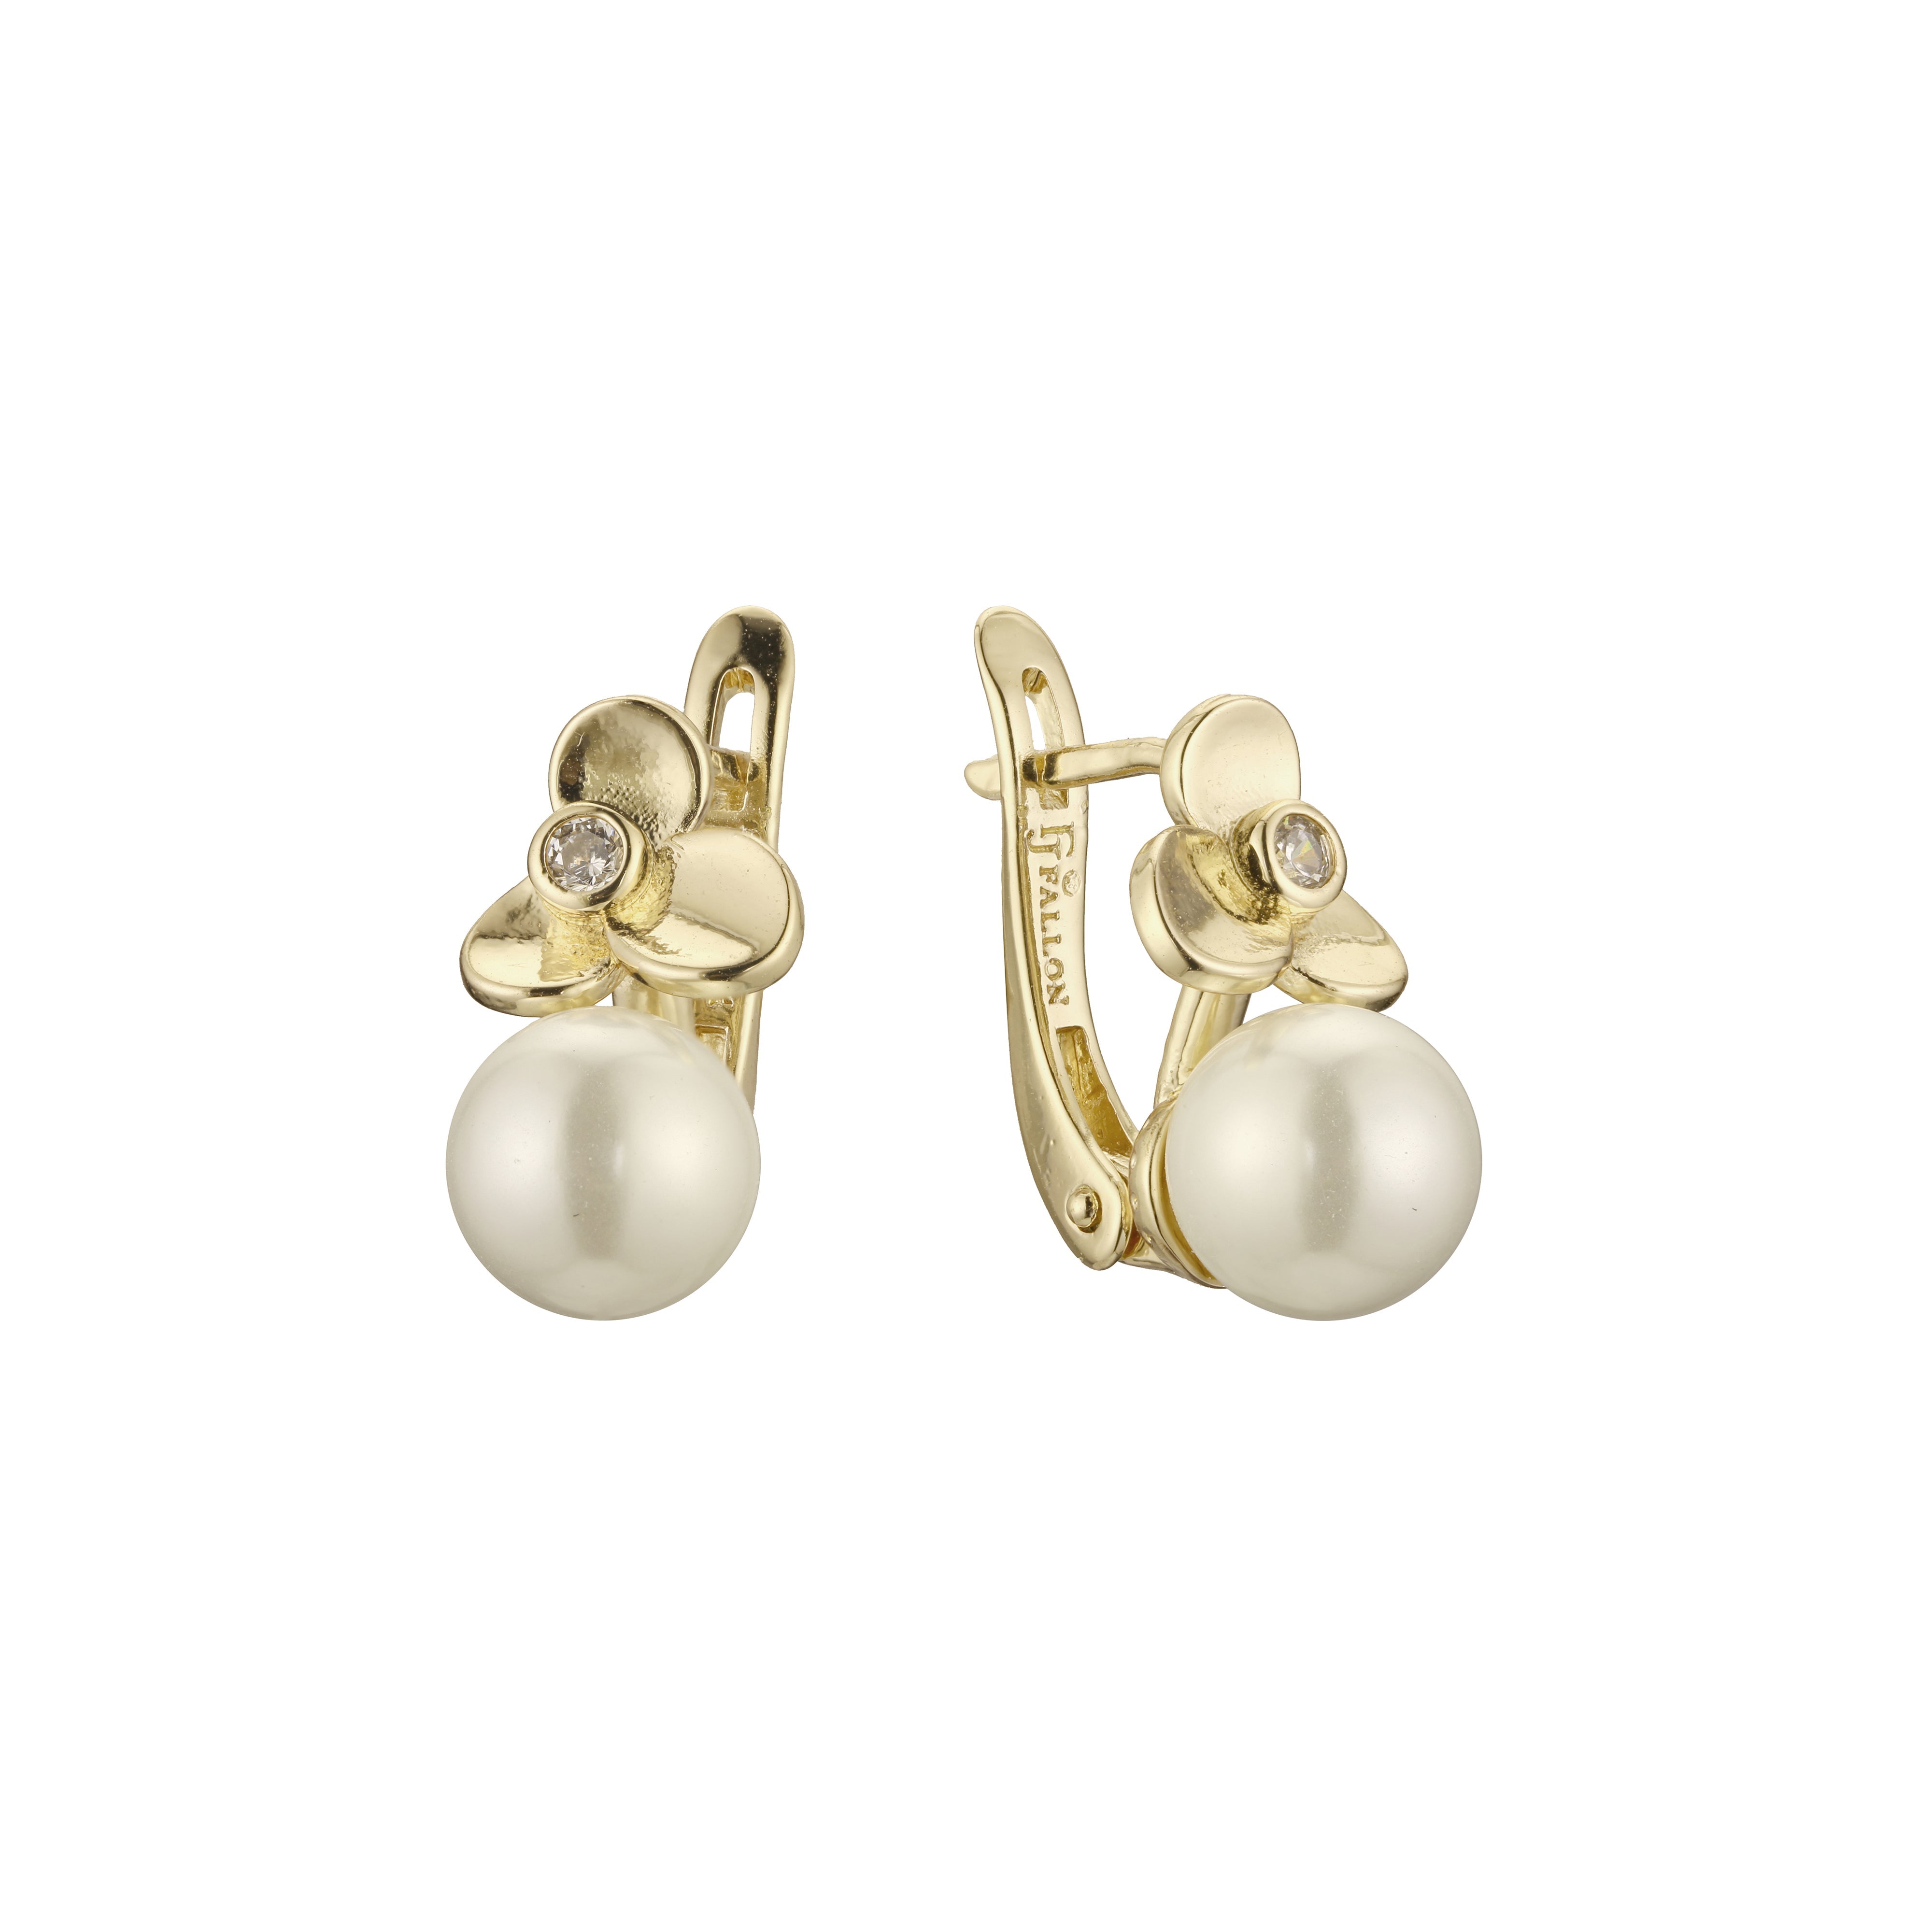 Flower pearl earrings in 14K Gold, Rose Gold plating colors